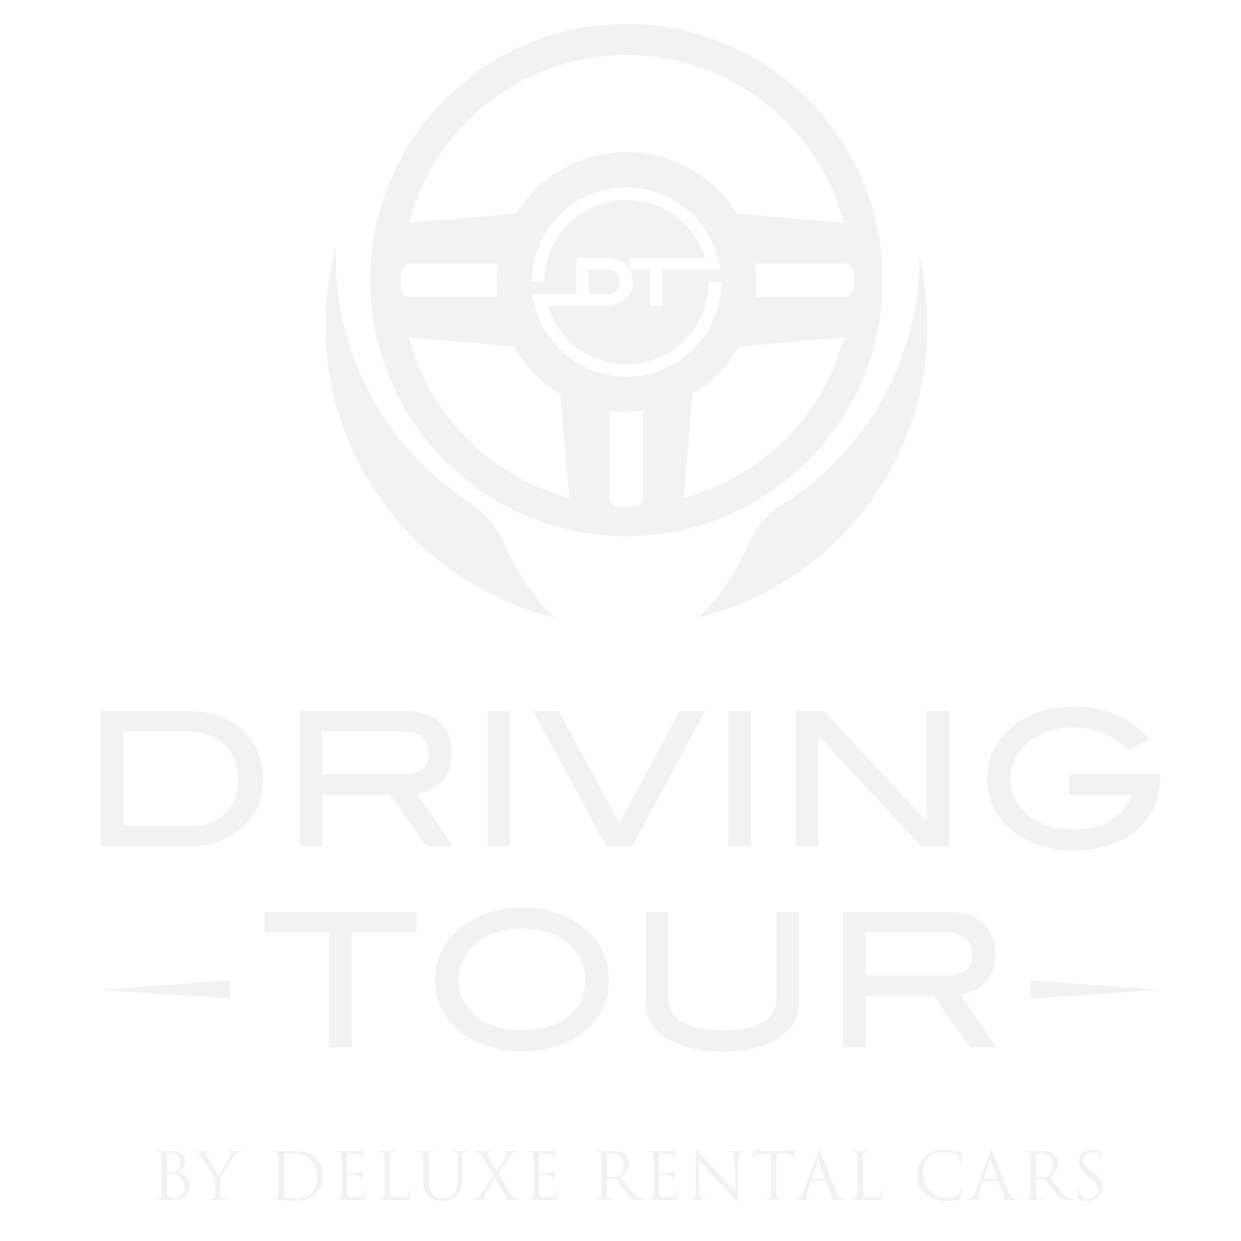 ConduciendoTour_logo